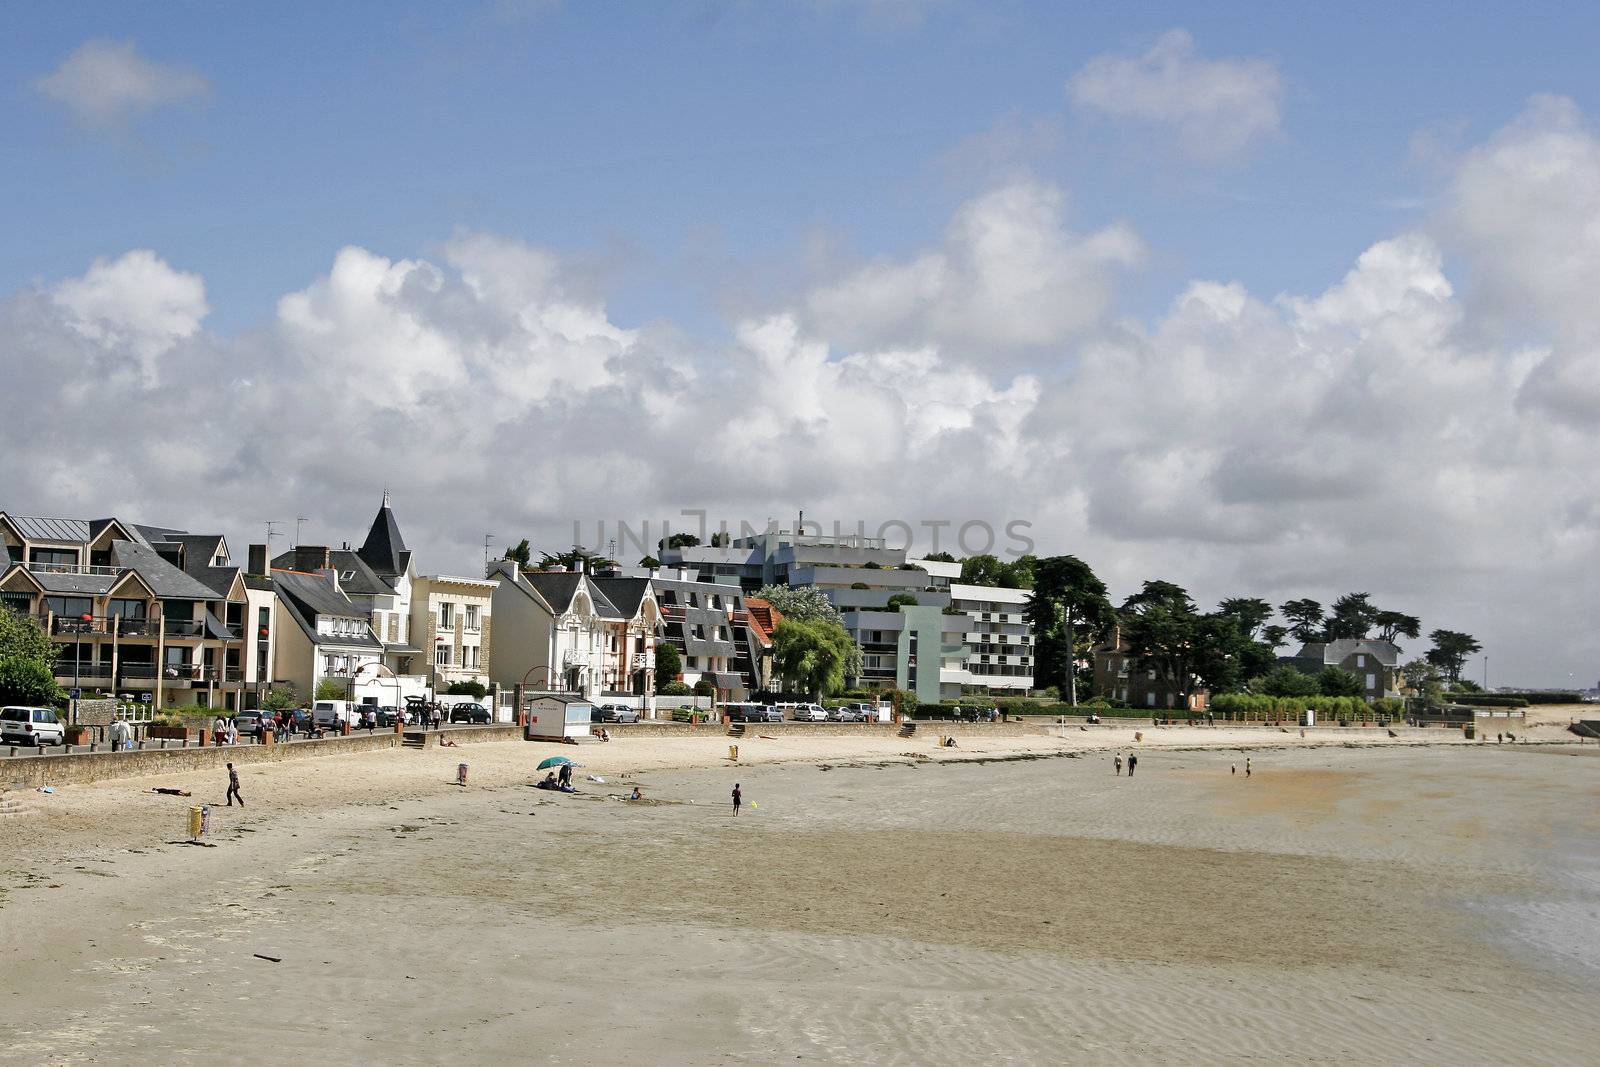 On the sand beach near Larmor-Plage, Morbihan, Brittany, North France.